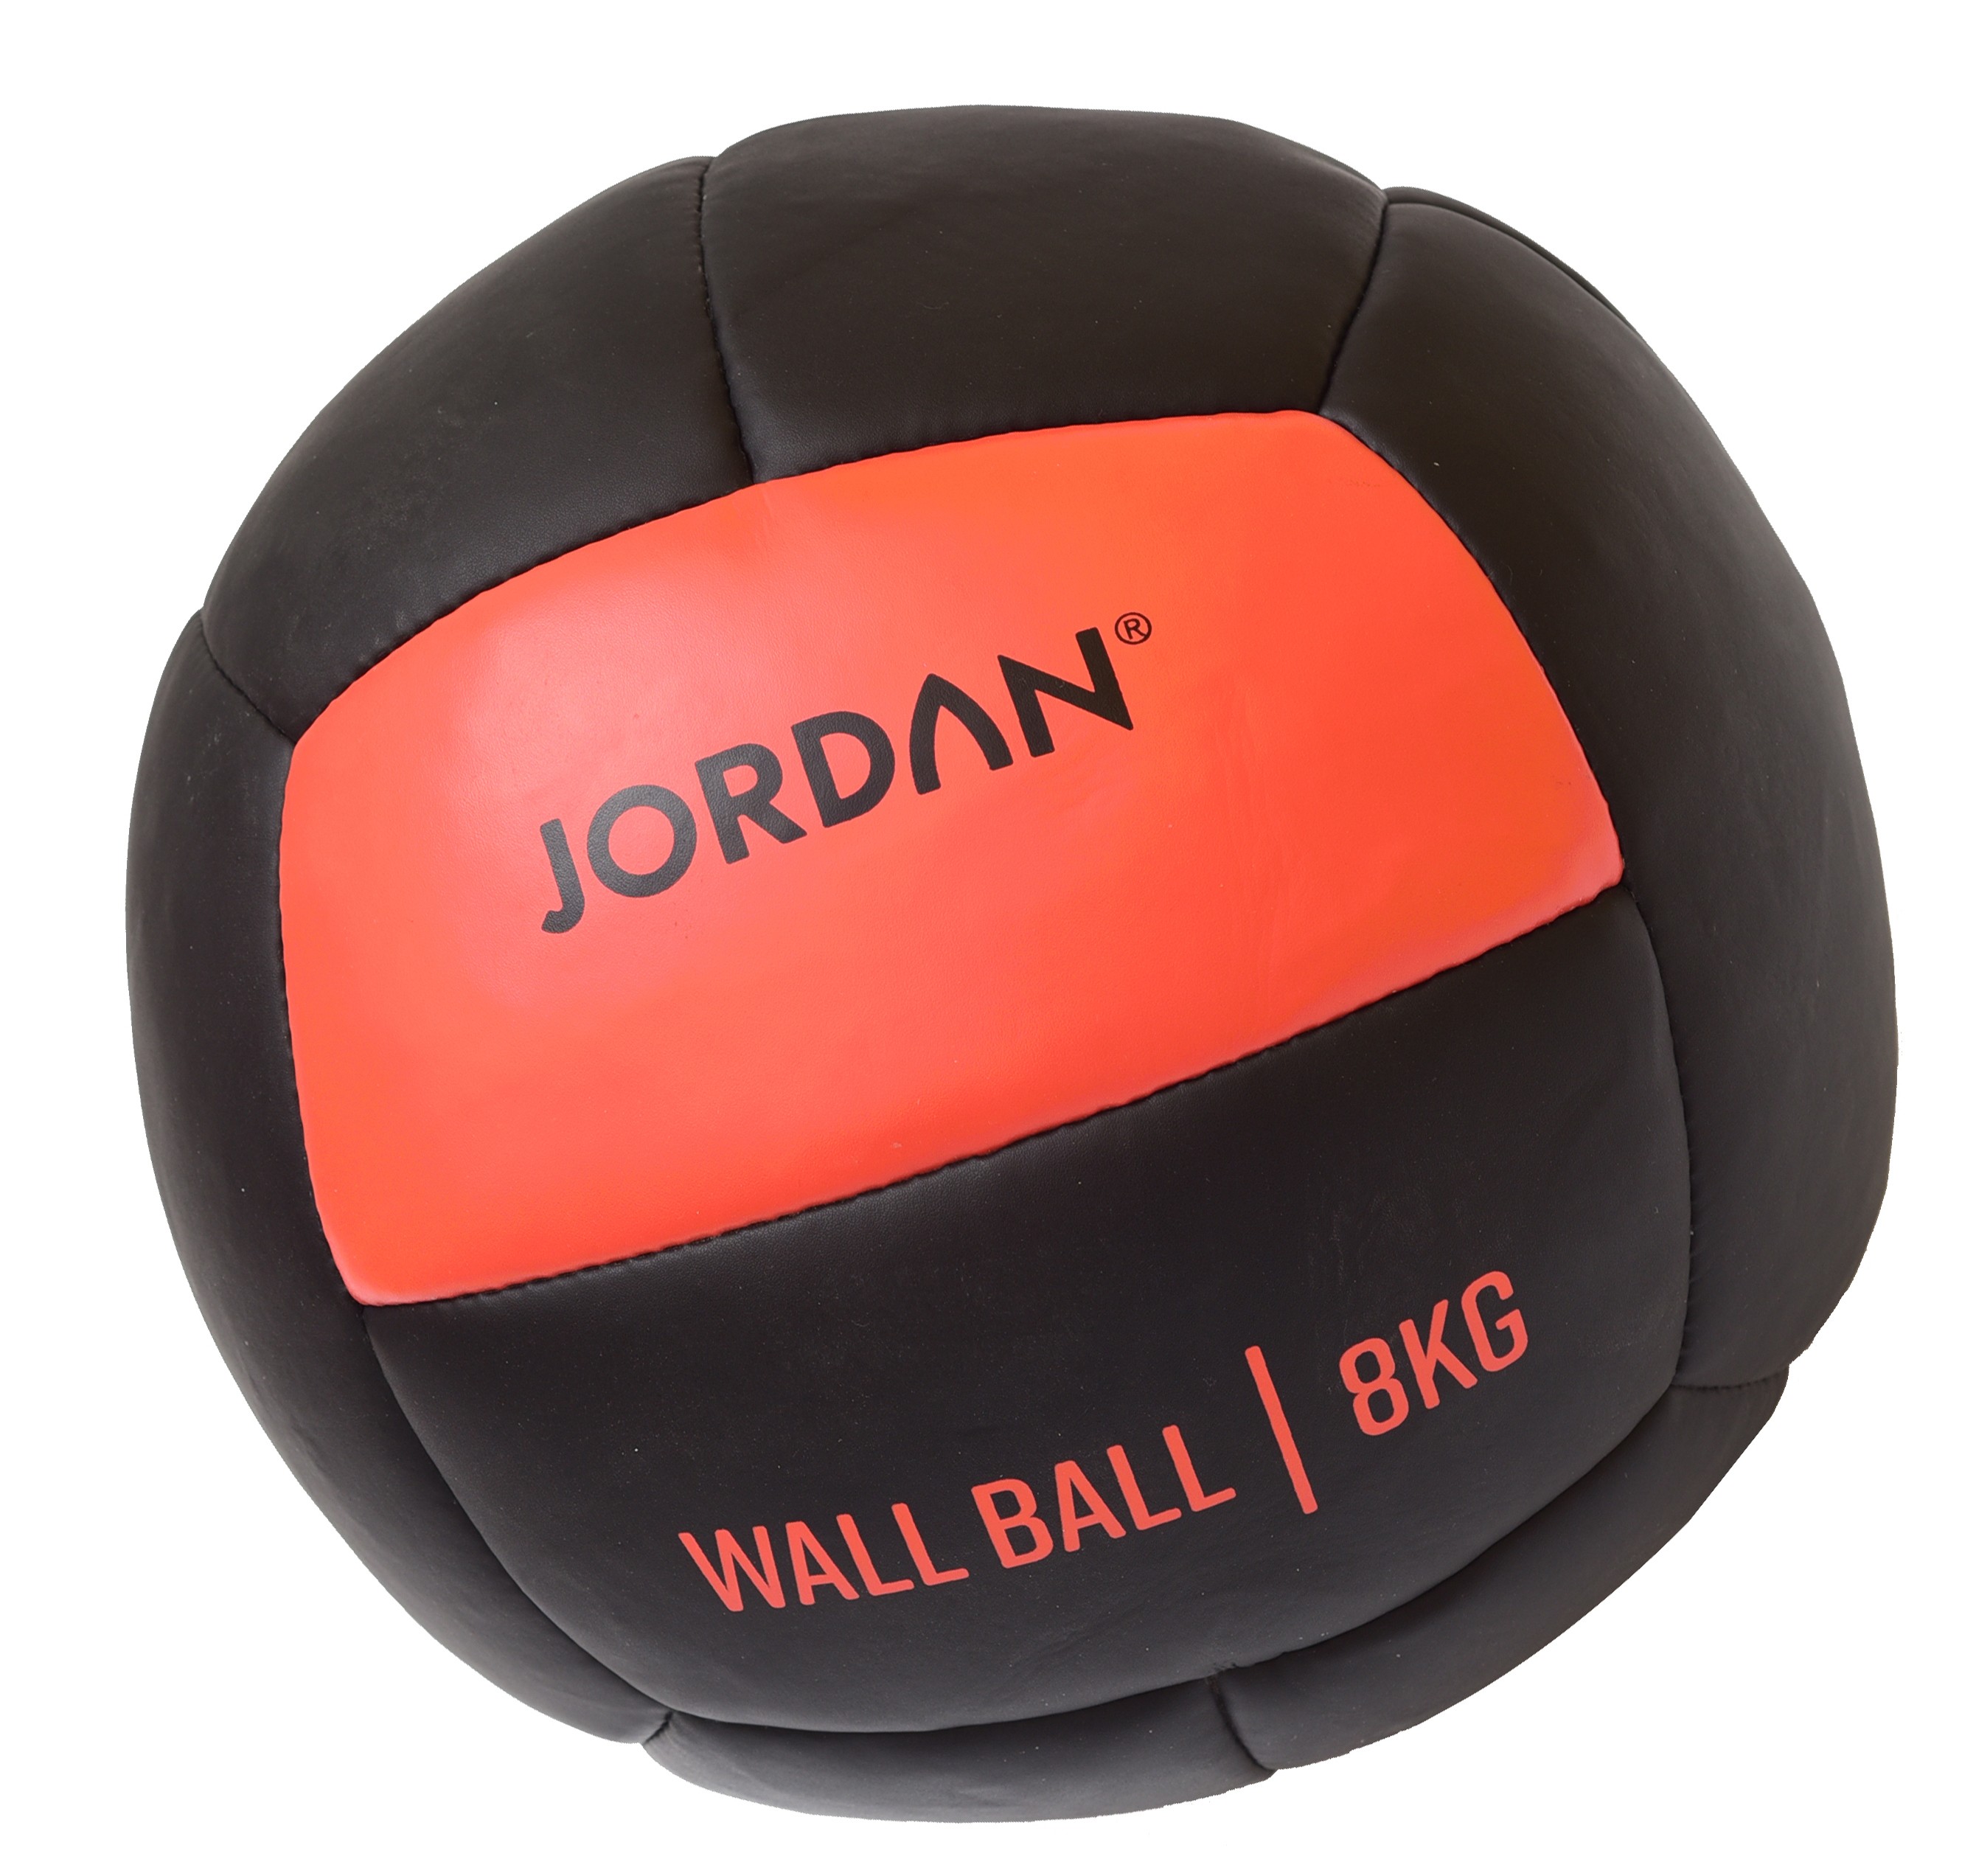 Wallball-Oversize Medicine ball (Orange) Ga voor kwaliteit | AStepAhead - Wall Ball (Oversized Medicine Ball) -